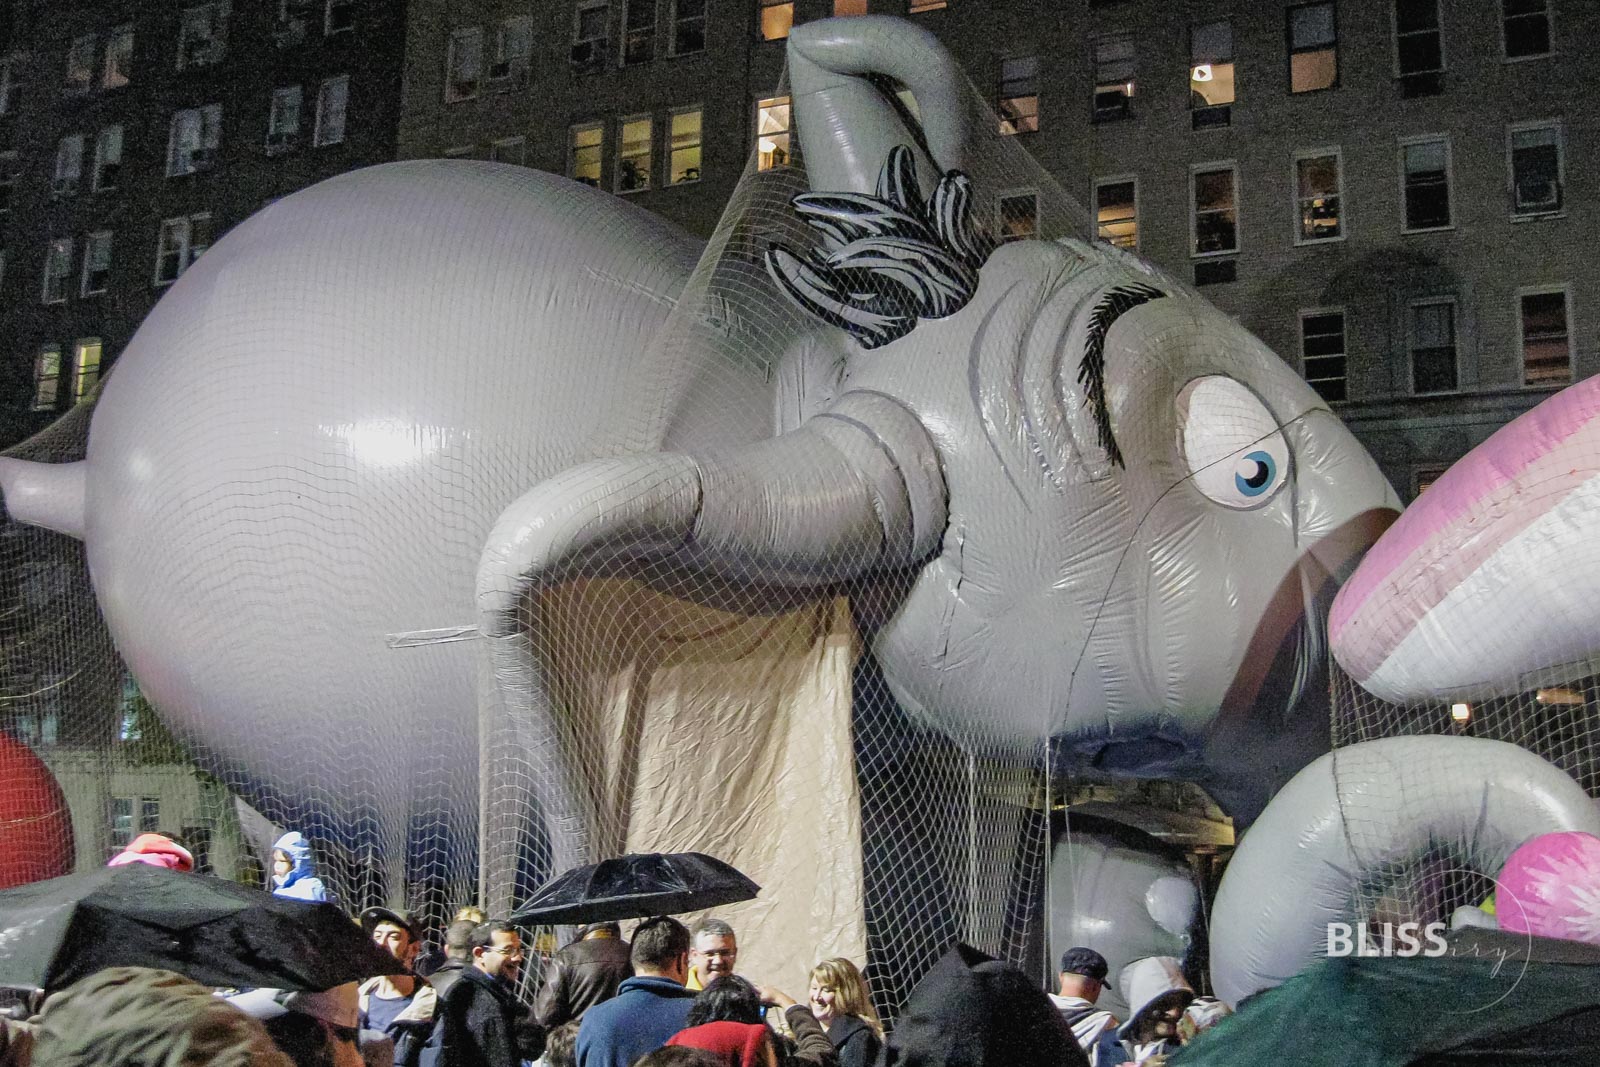 Macy’s Thanksgiving Day Parade - New York City - Luftballons-Parade - Macys Thanksgiving Parade New York - Tipps und beste Foto-Spots